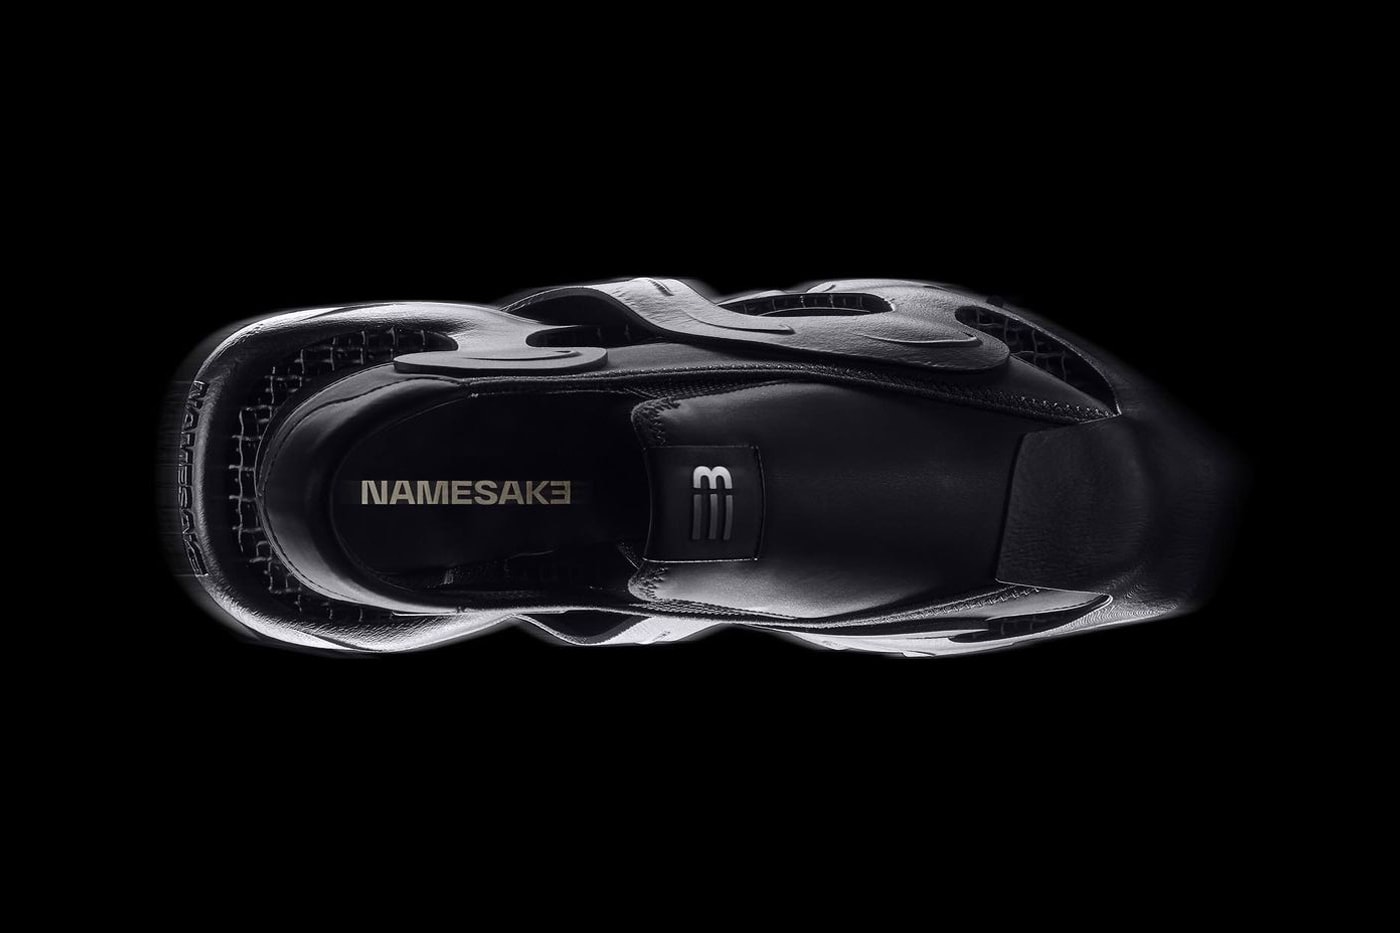 NAMESAKE 首雙 3D 打印鞋款系列「CLIPPERS」正式登場